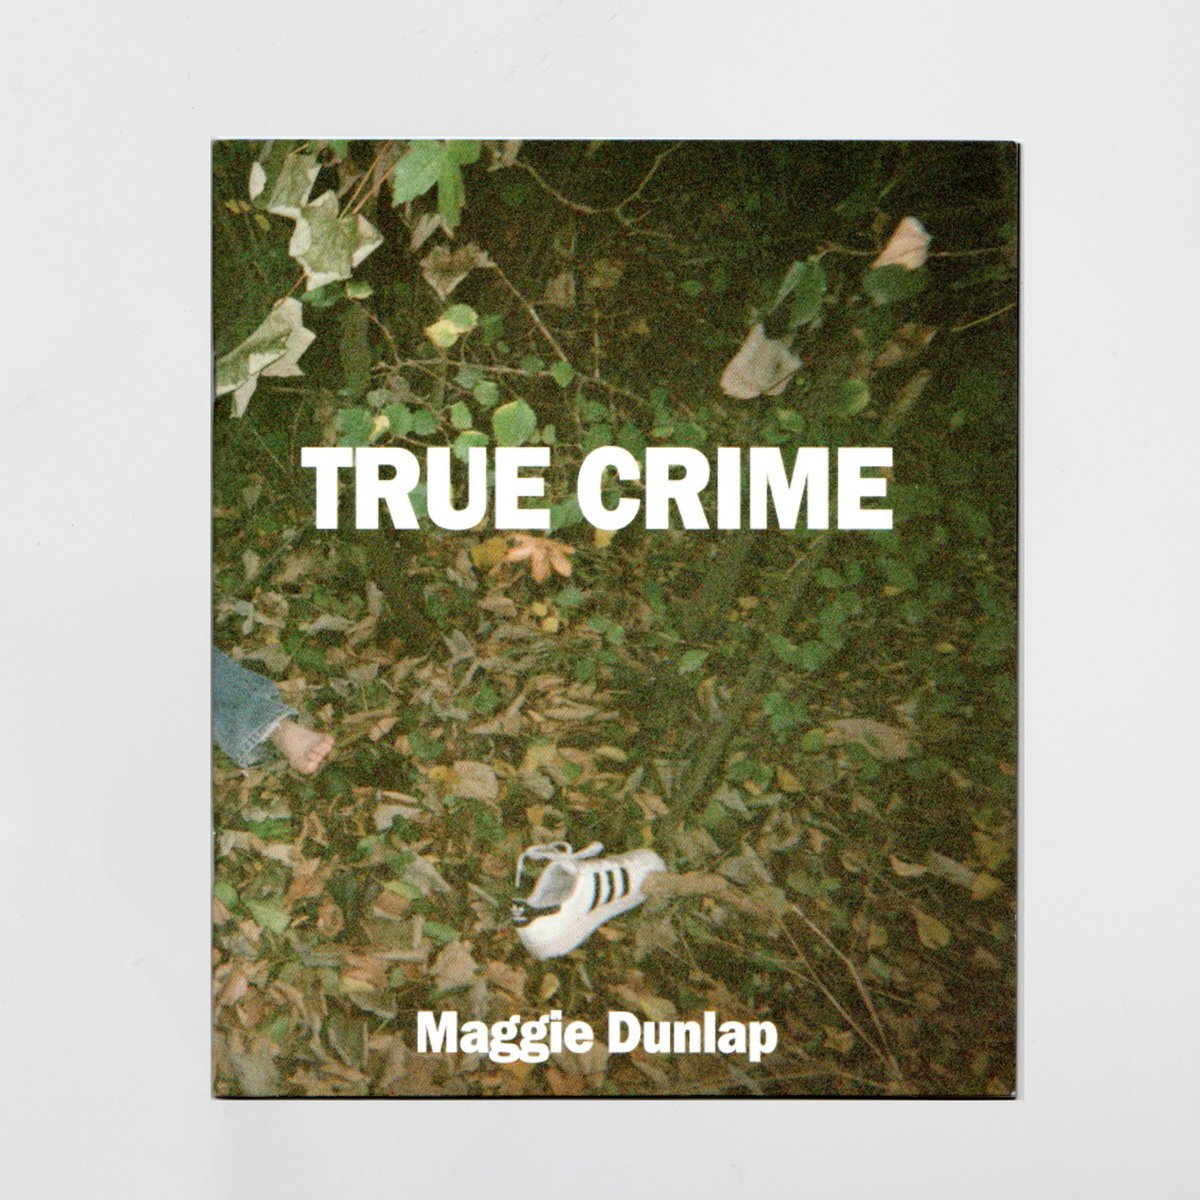 TRUE CRIME by Maggie Dunlap